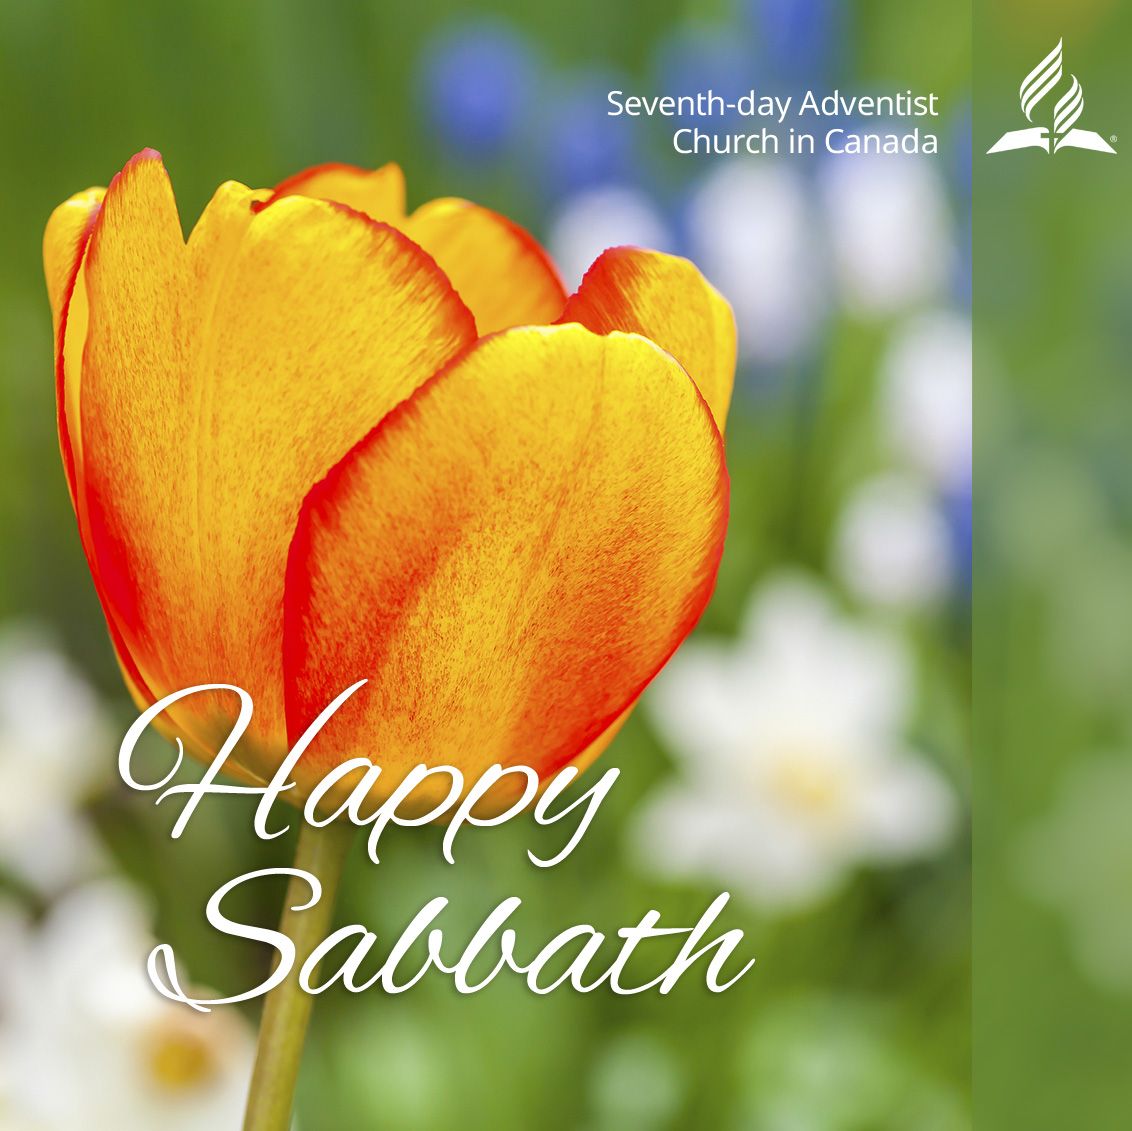 Adventist Messenger's tweet - "Happy Sabbath from Canadian Adventist Messenger! 